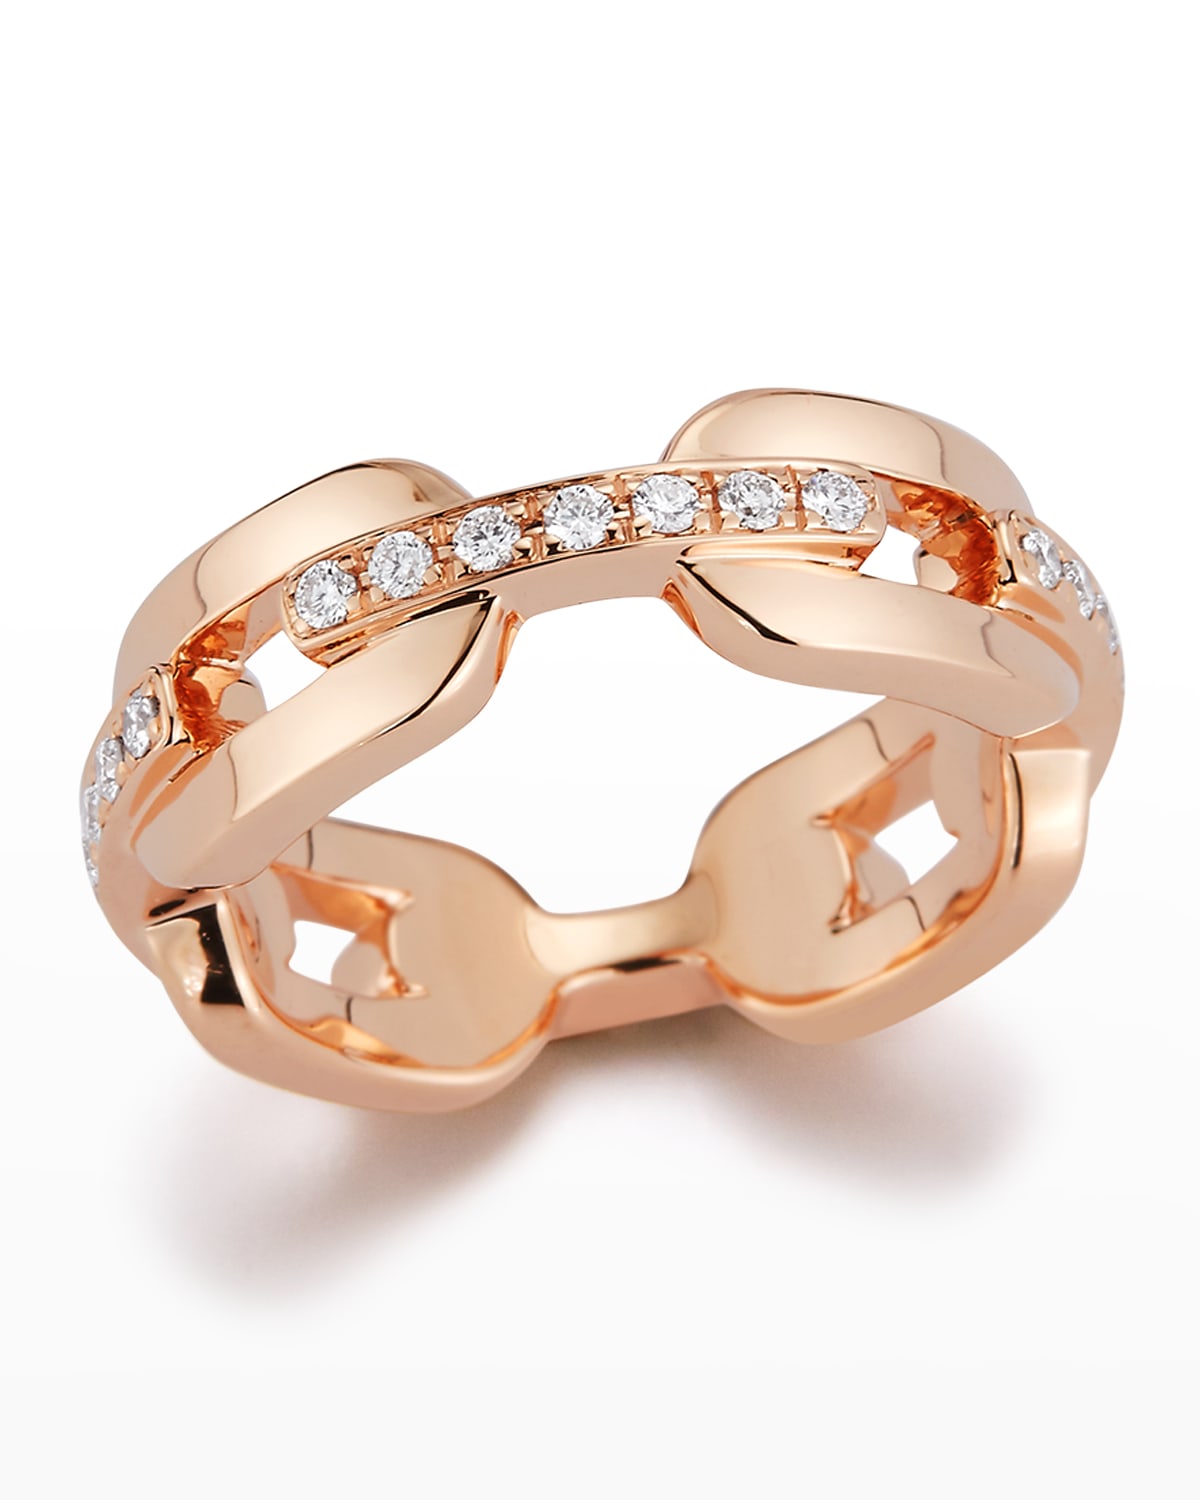 Walters Faith Saxon Rose Gold Diamond Bar Flat Chain Link Ring Size 6